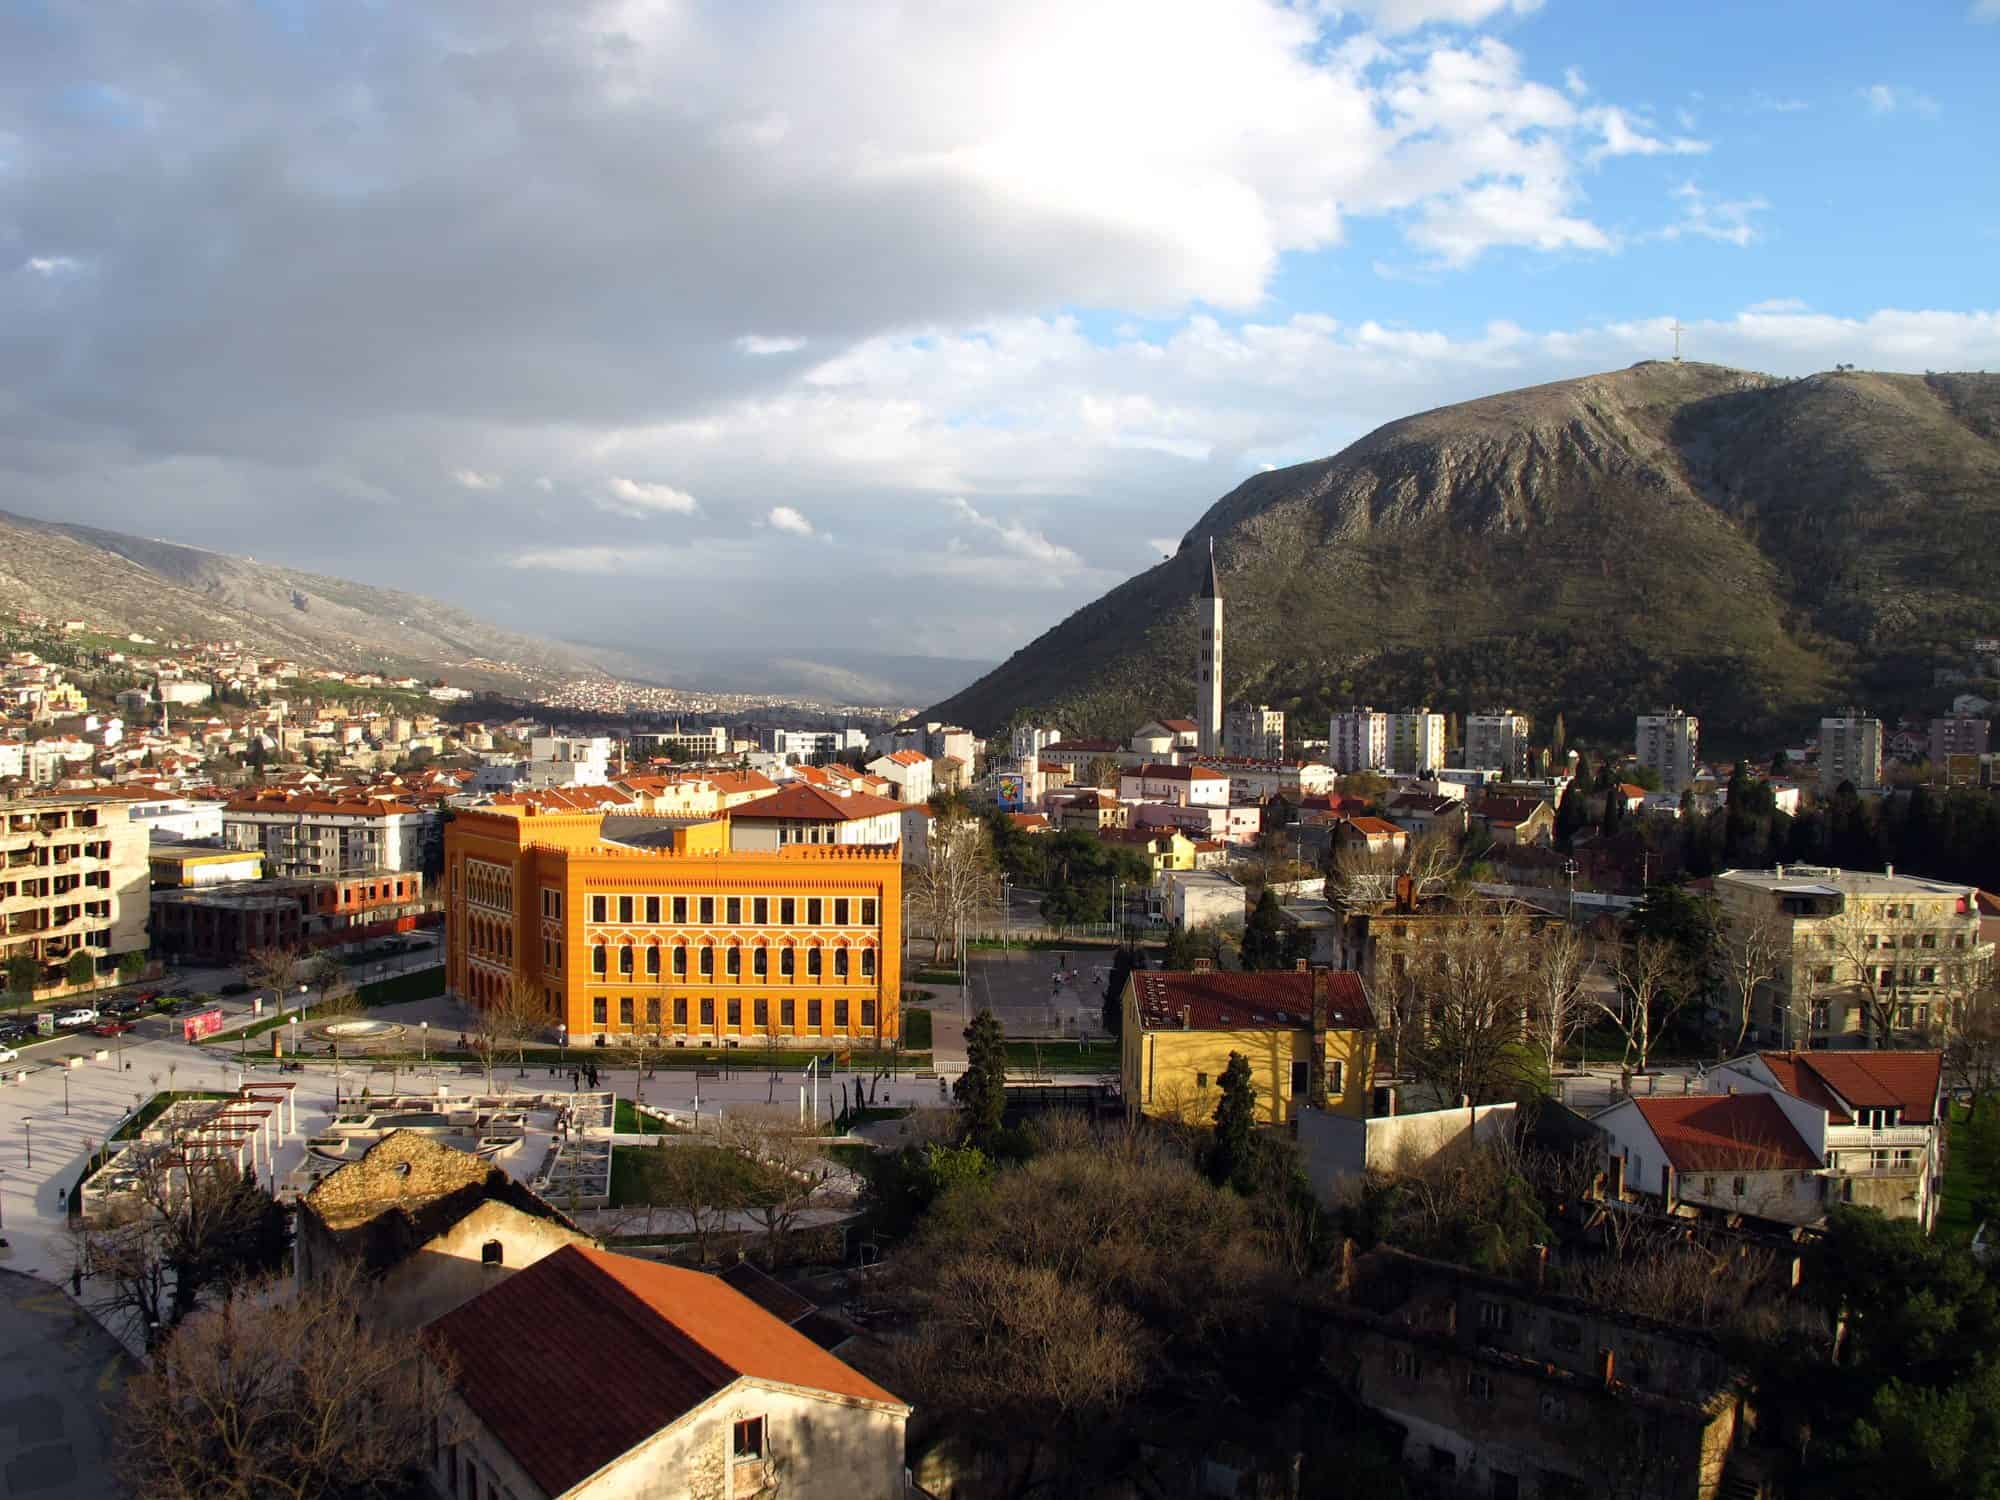 Bigfoottraveller.com l 波黑莫斯塔尔（Mostar），战争的痕迹依然清晰可见